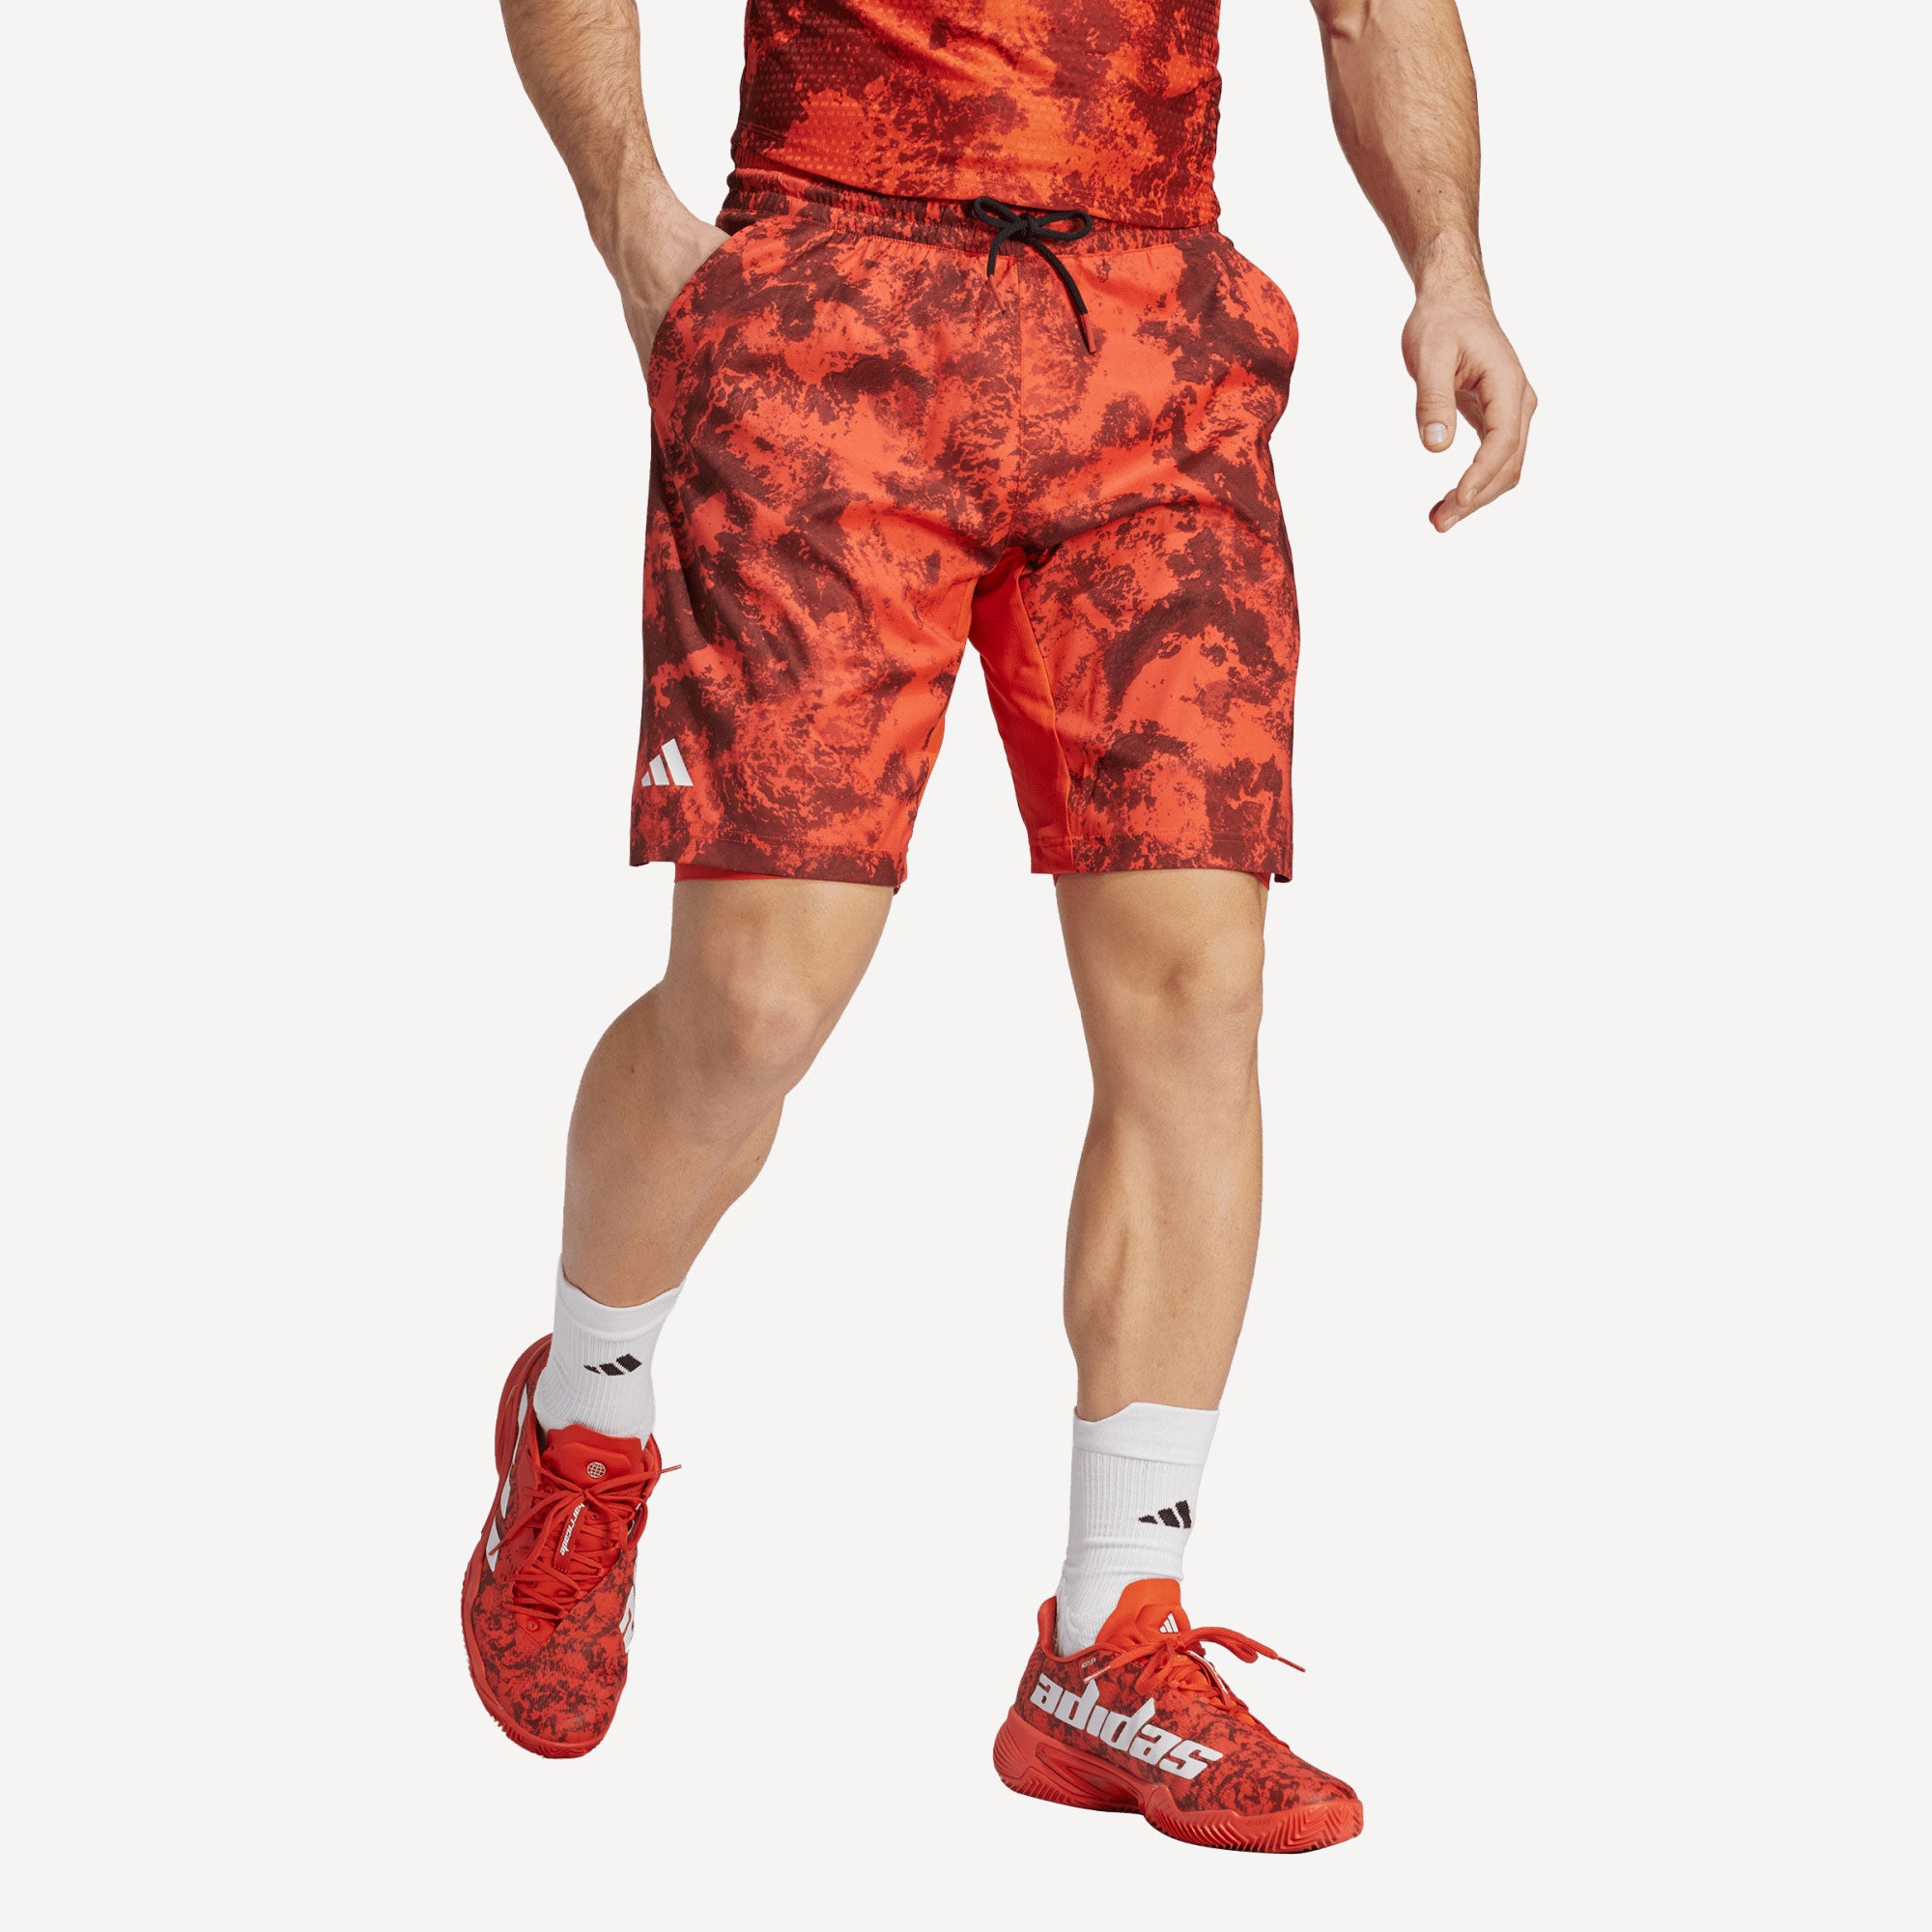 adidas Paris Men's 2IN1 Tennis Shorts Red (4)